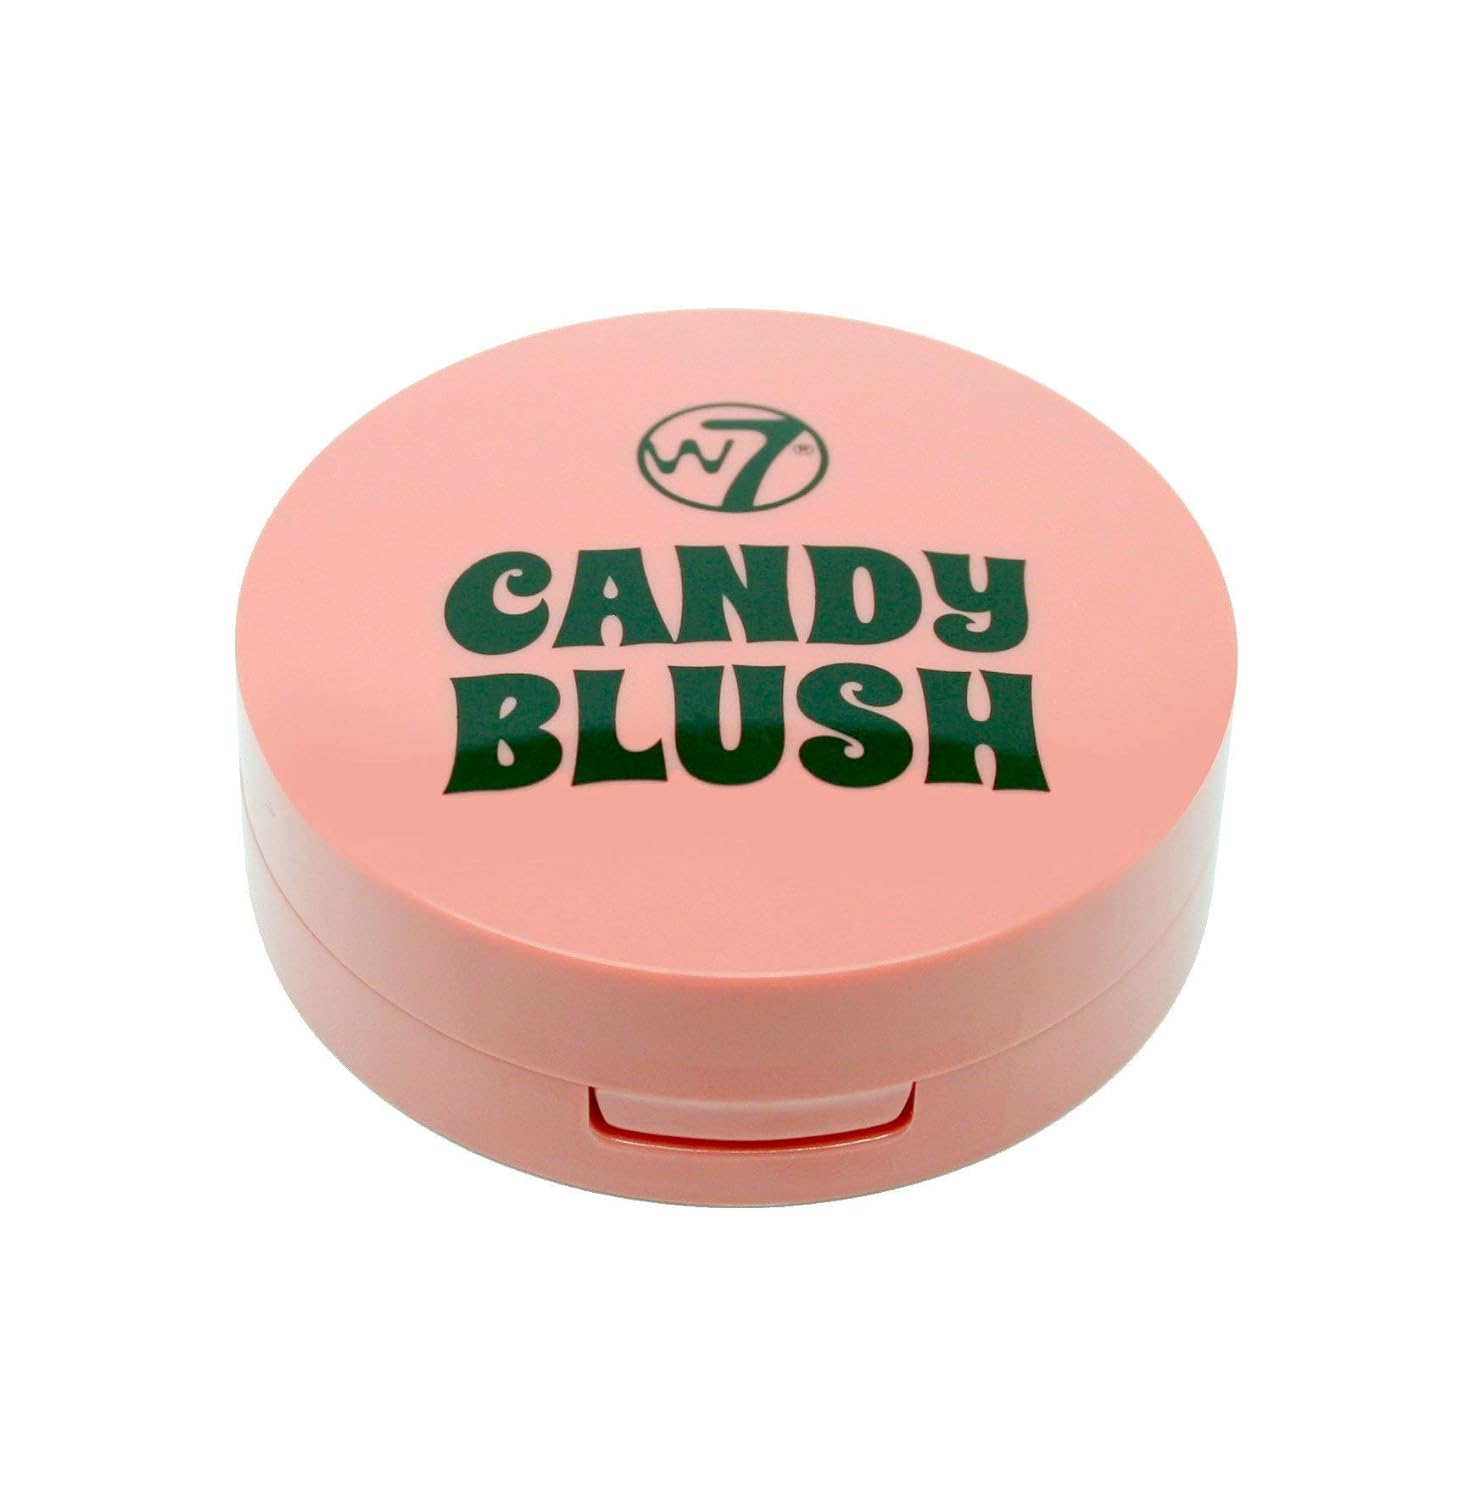 Candy Blush Blusher Galactic